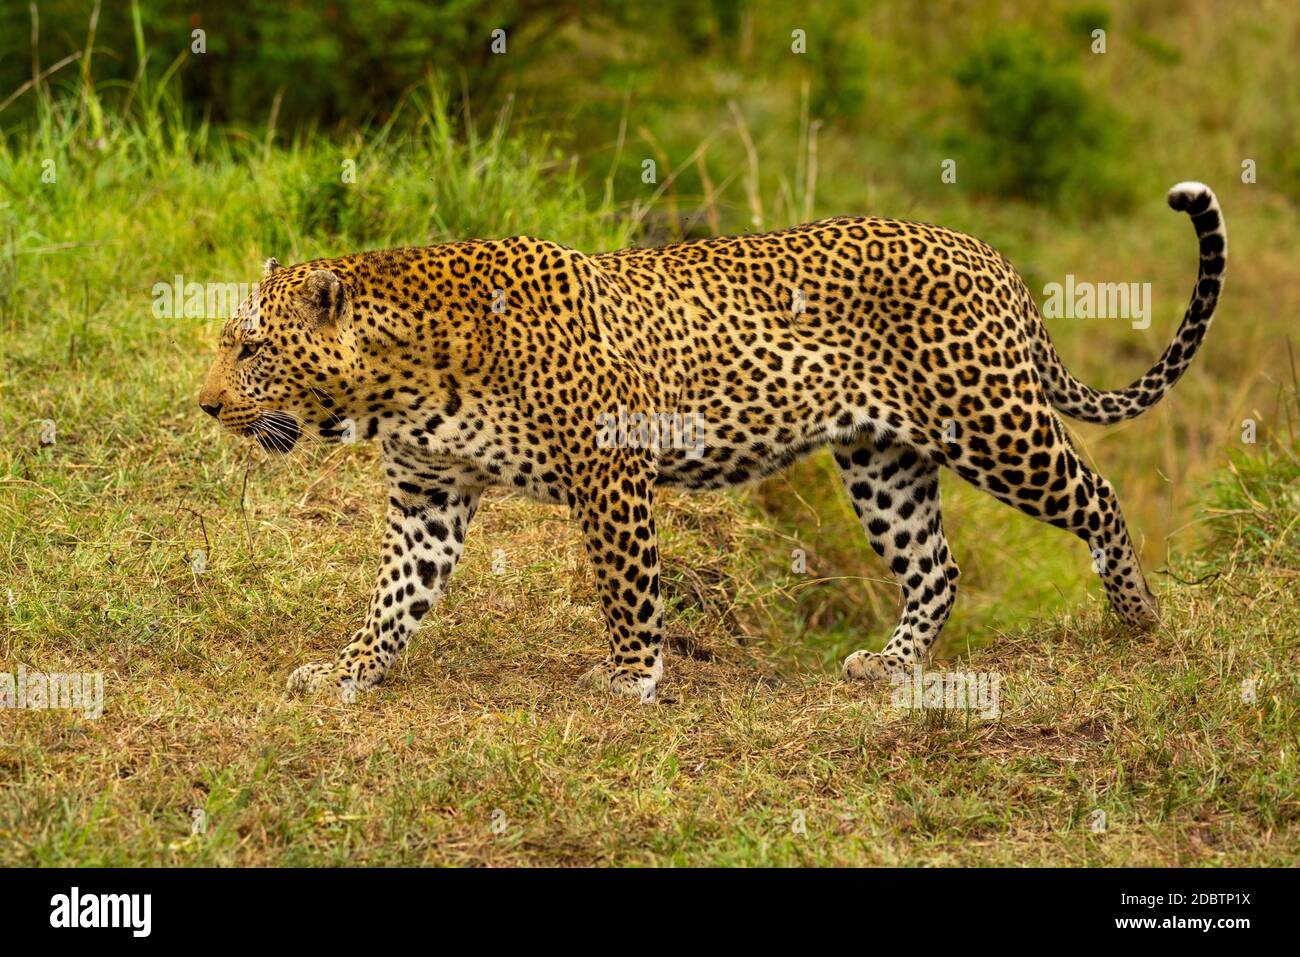 Leopard geht entlang grasbewachsenen Ufer in Richtung links Stockfoto